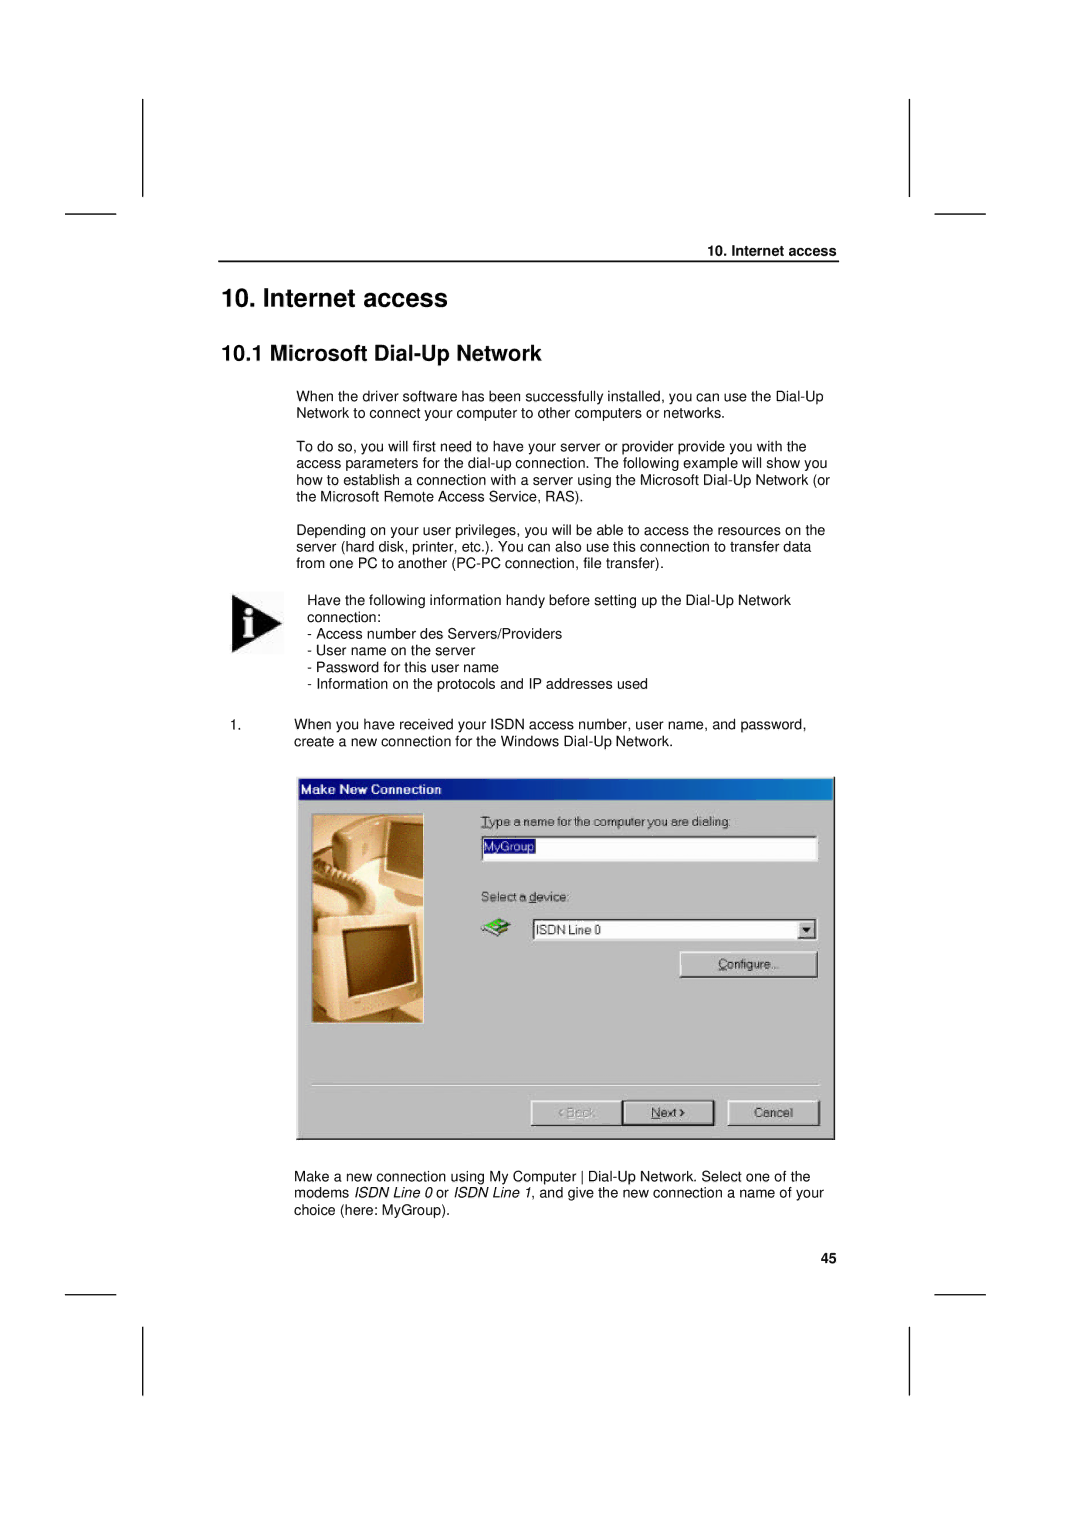 Siemens I-SURF manual Internet access, Microsoft Dial-Up Network 